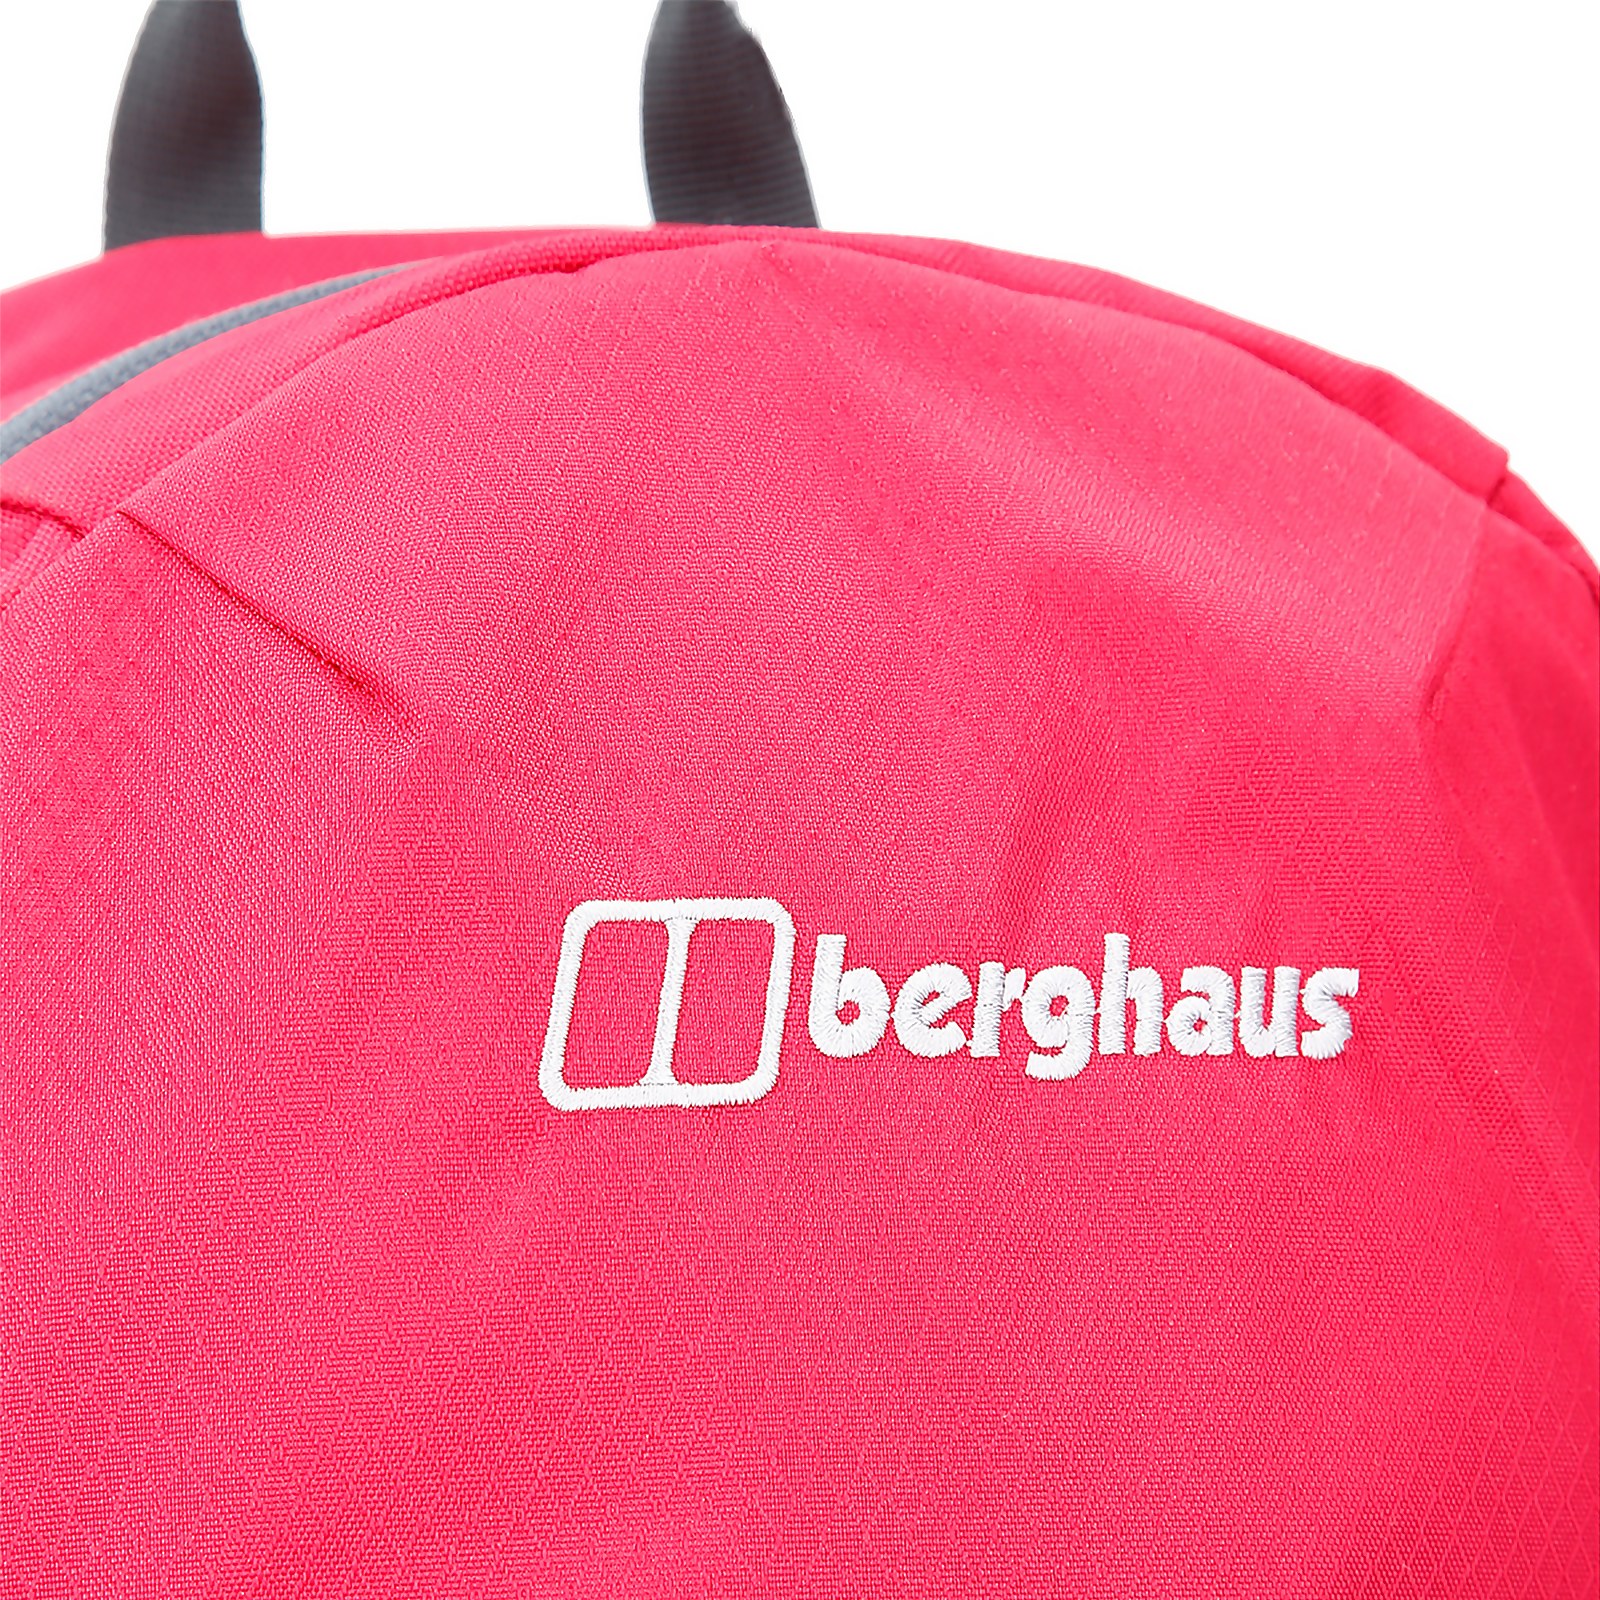 Berghaus Twentyfourseven 15 Rucksack  - Pink - One Size